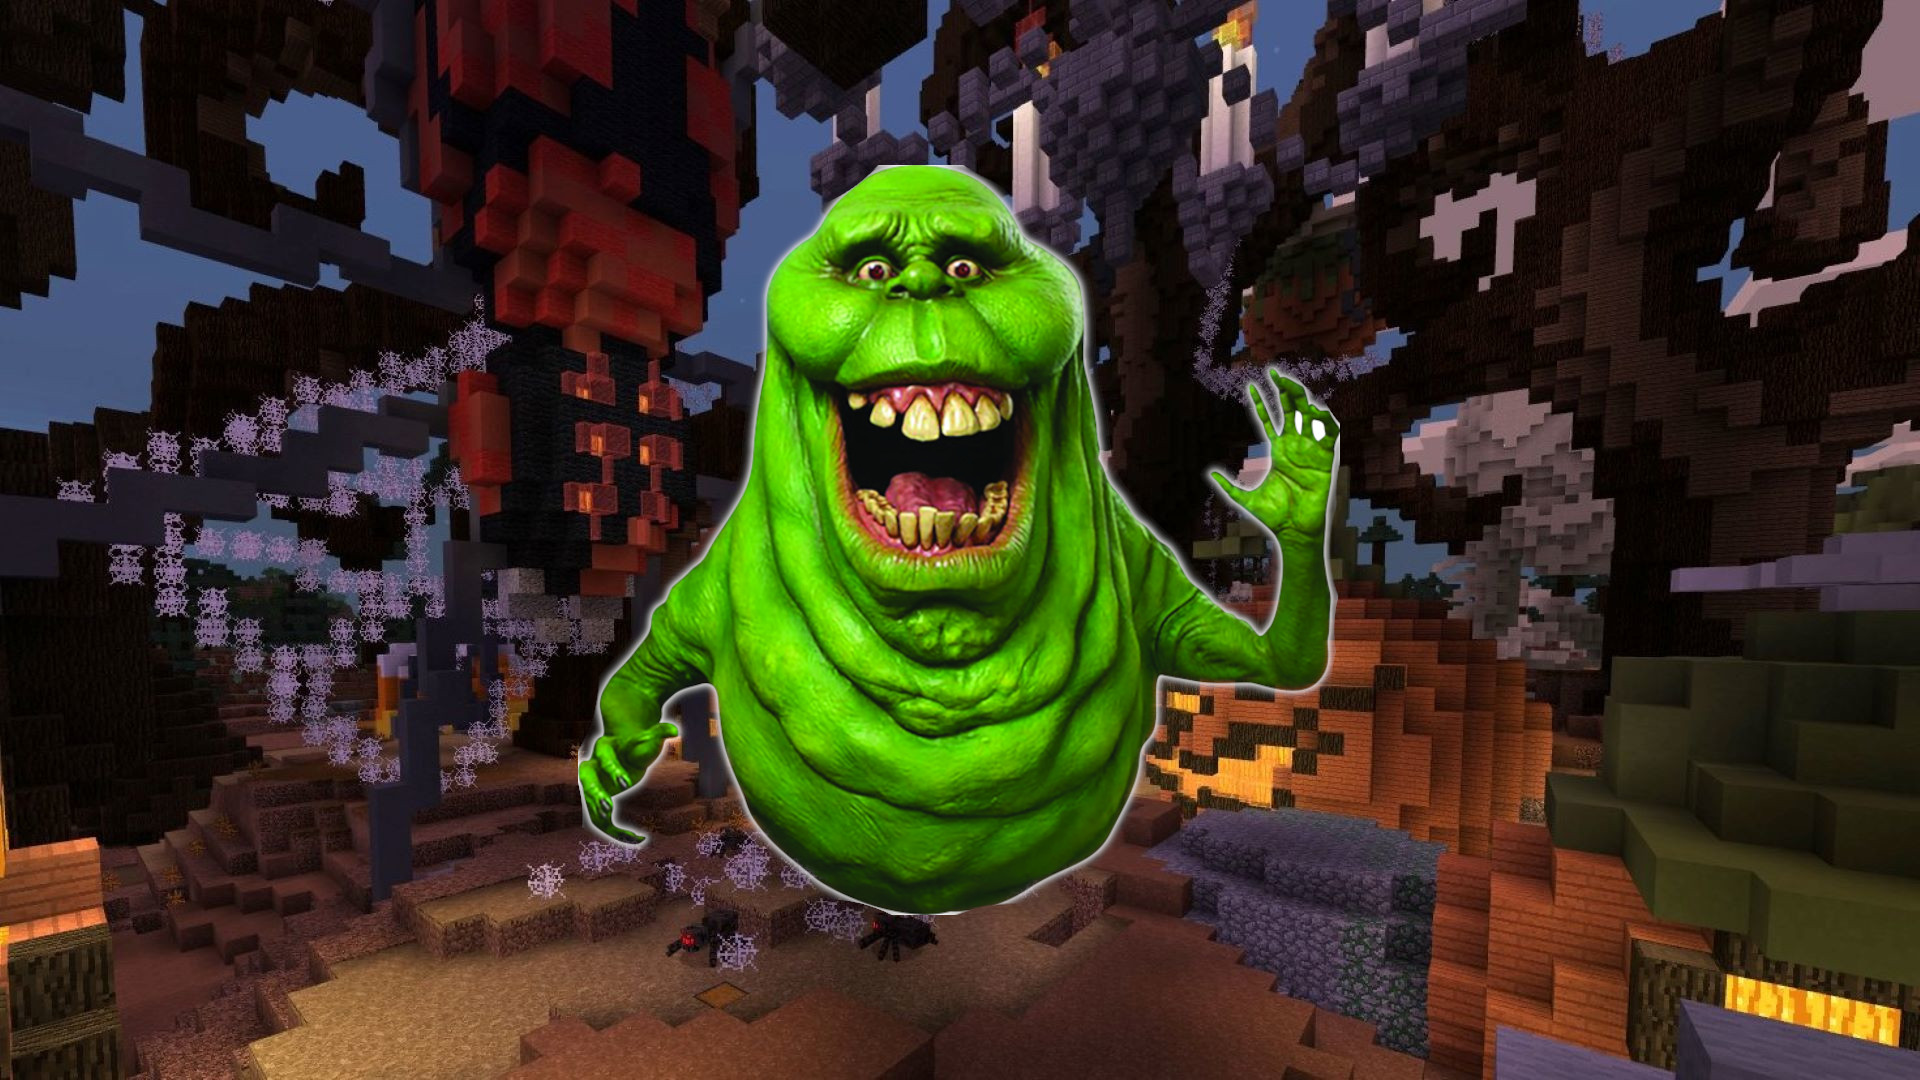 Minecraft fan recreates Ghostbusters theme, makes us feel good